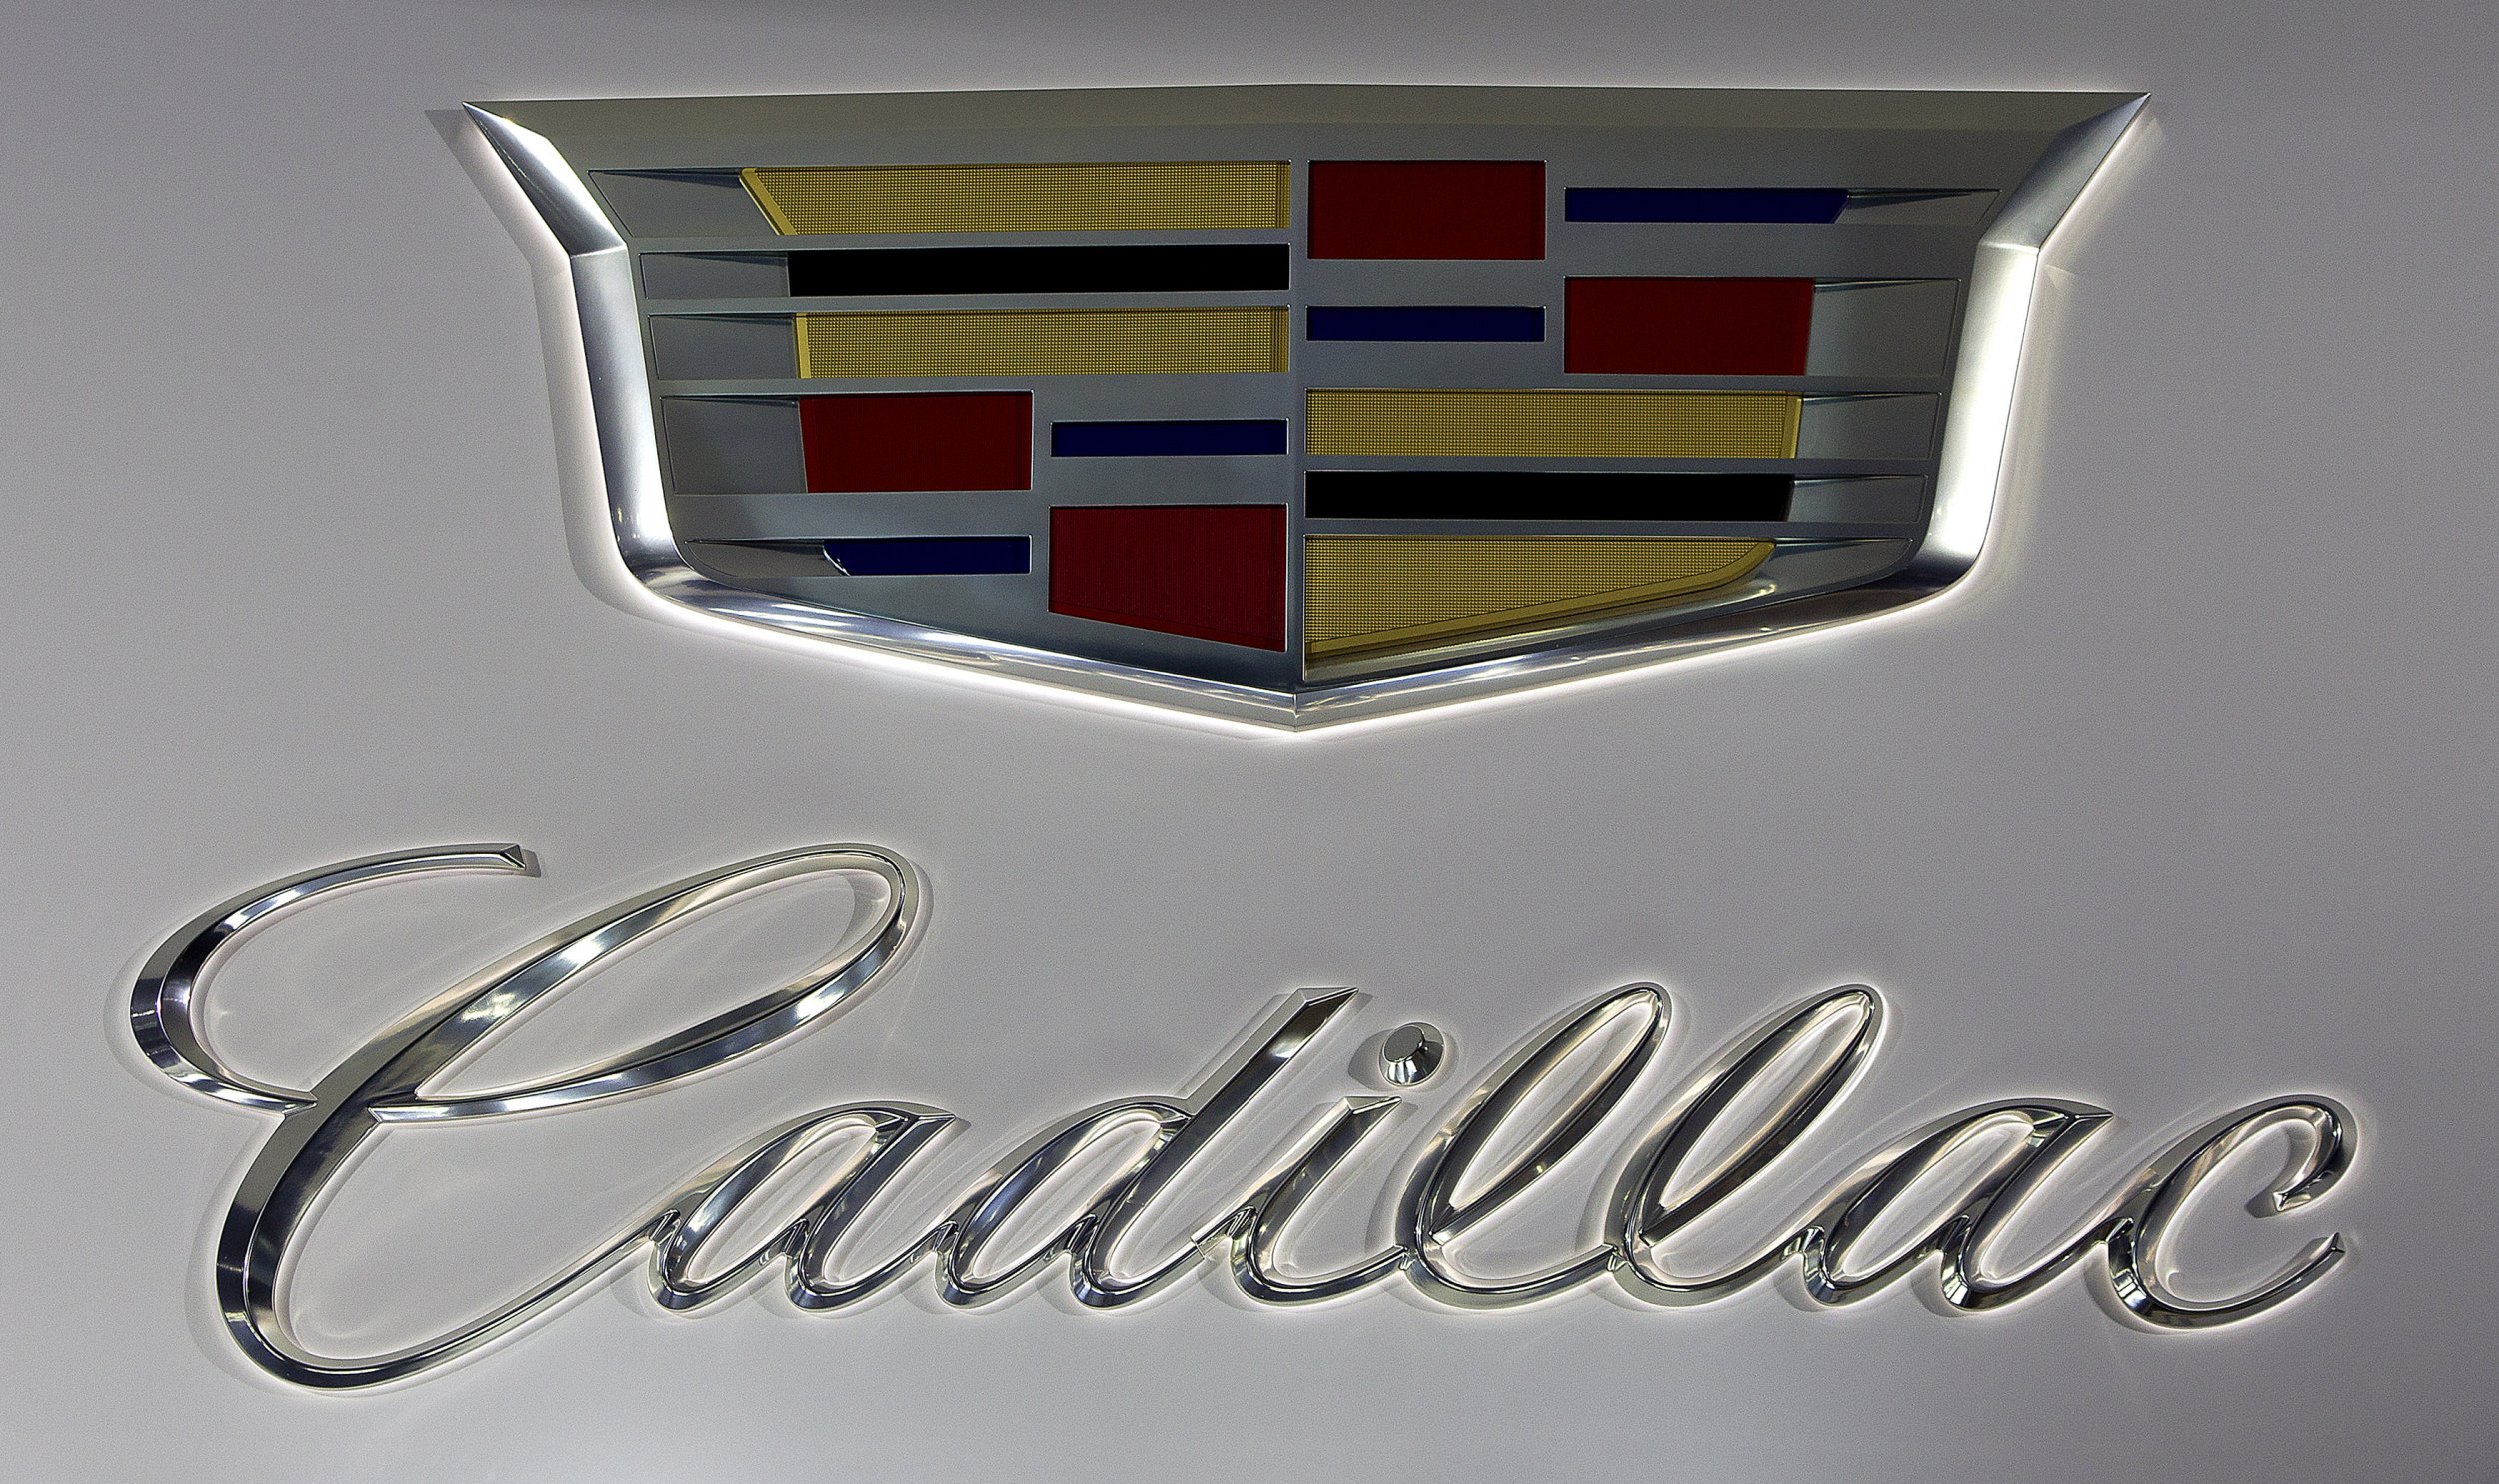 Cadillac надпись